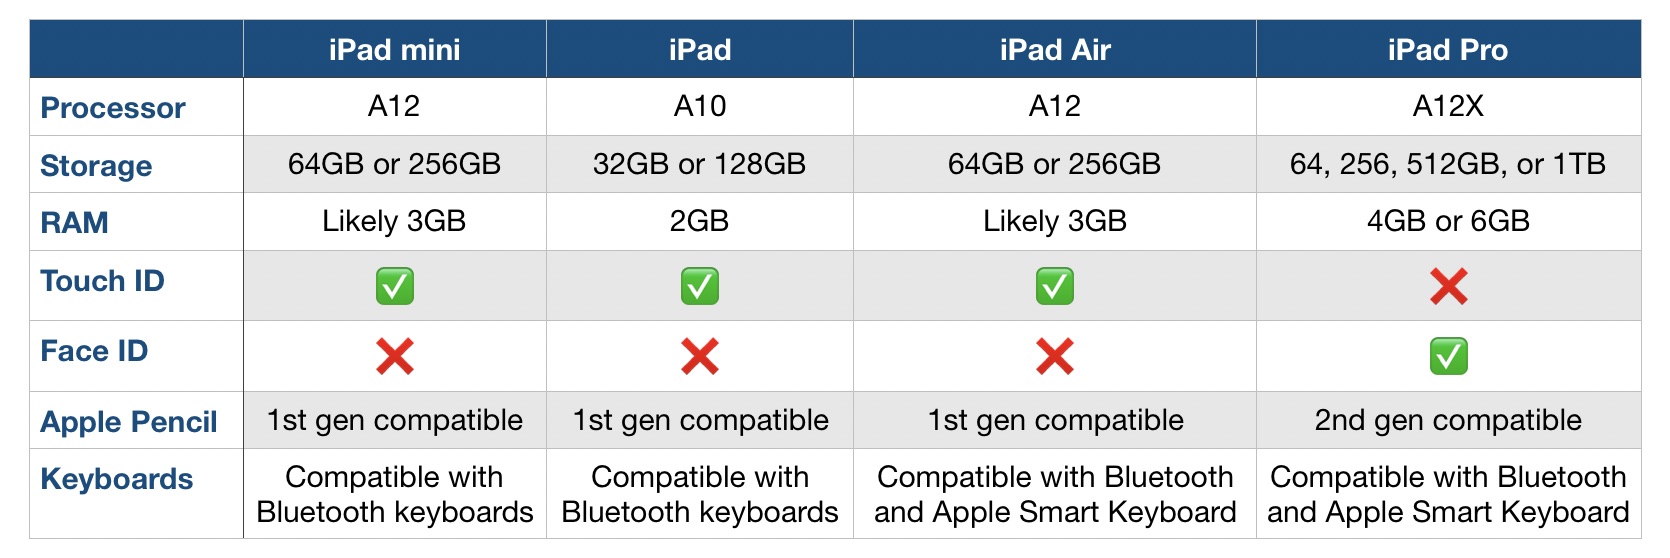 iPad lineup comparion processor, RAM, storage